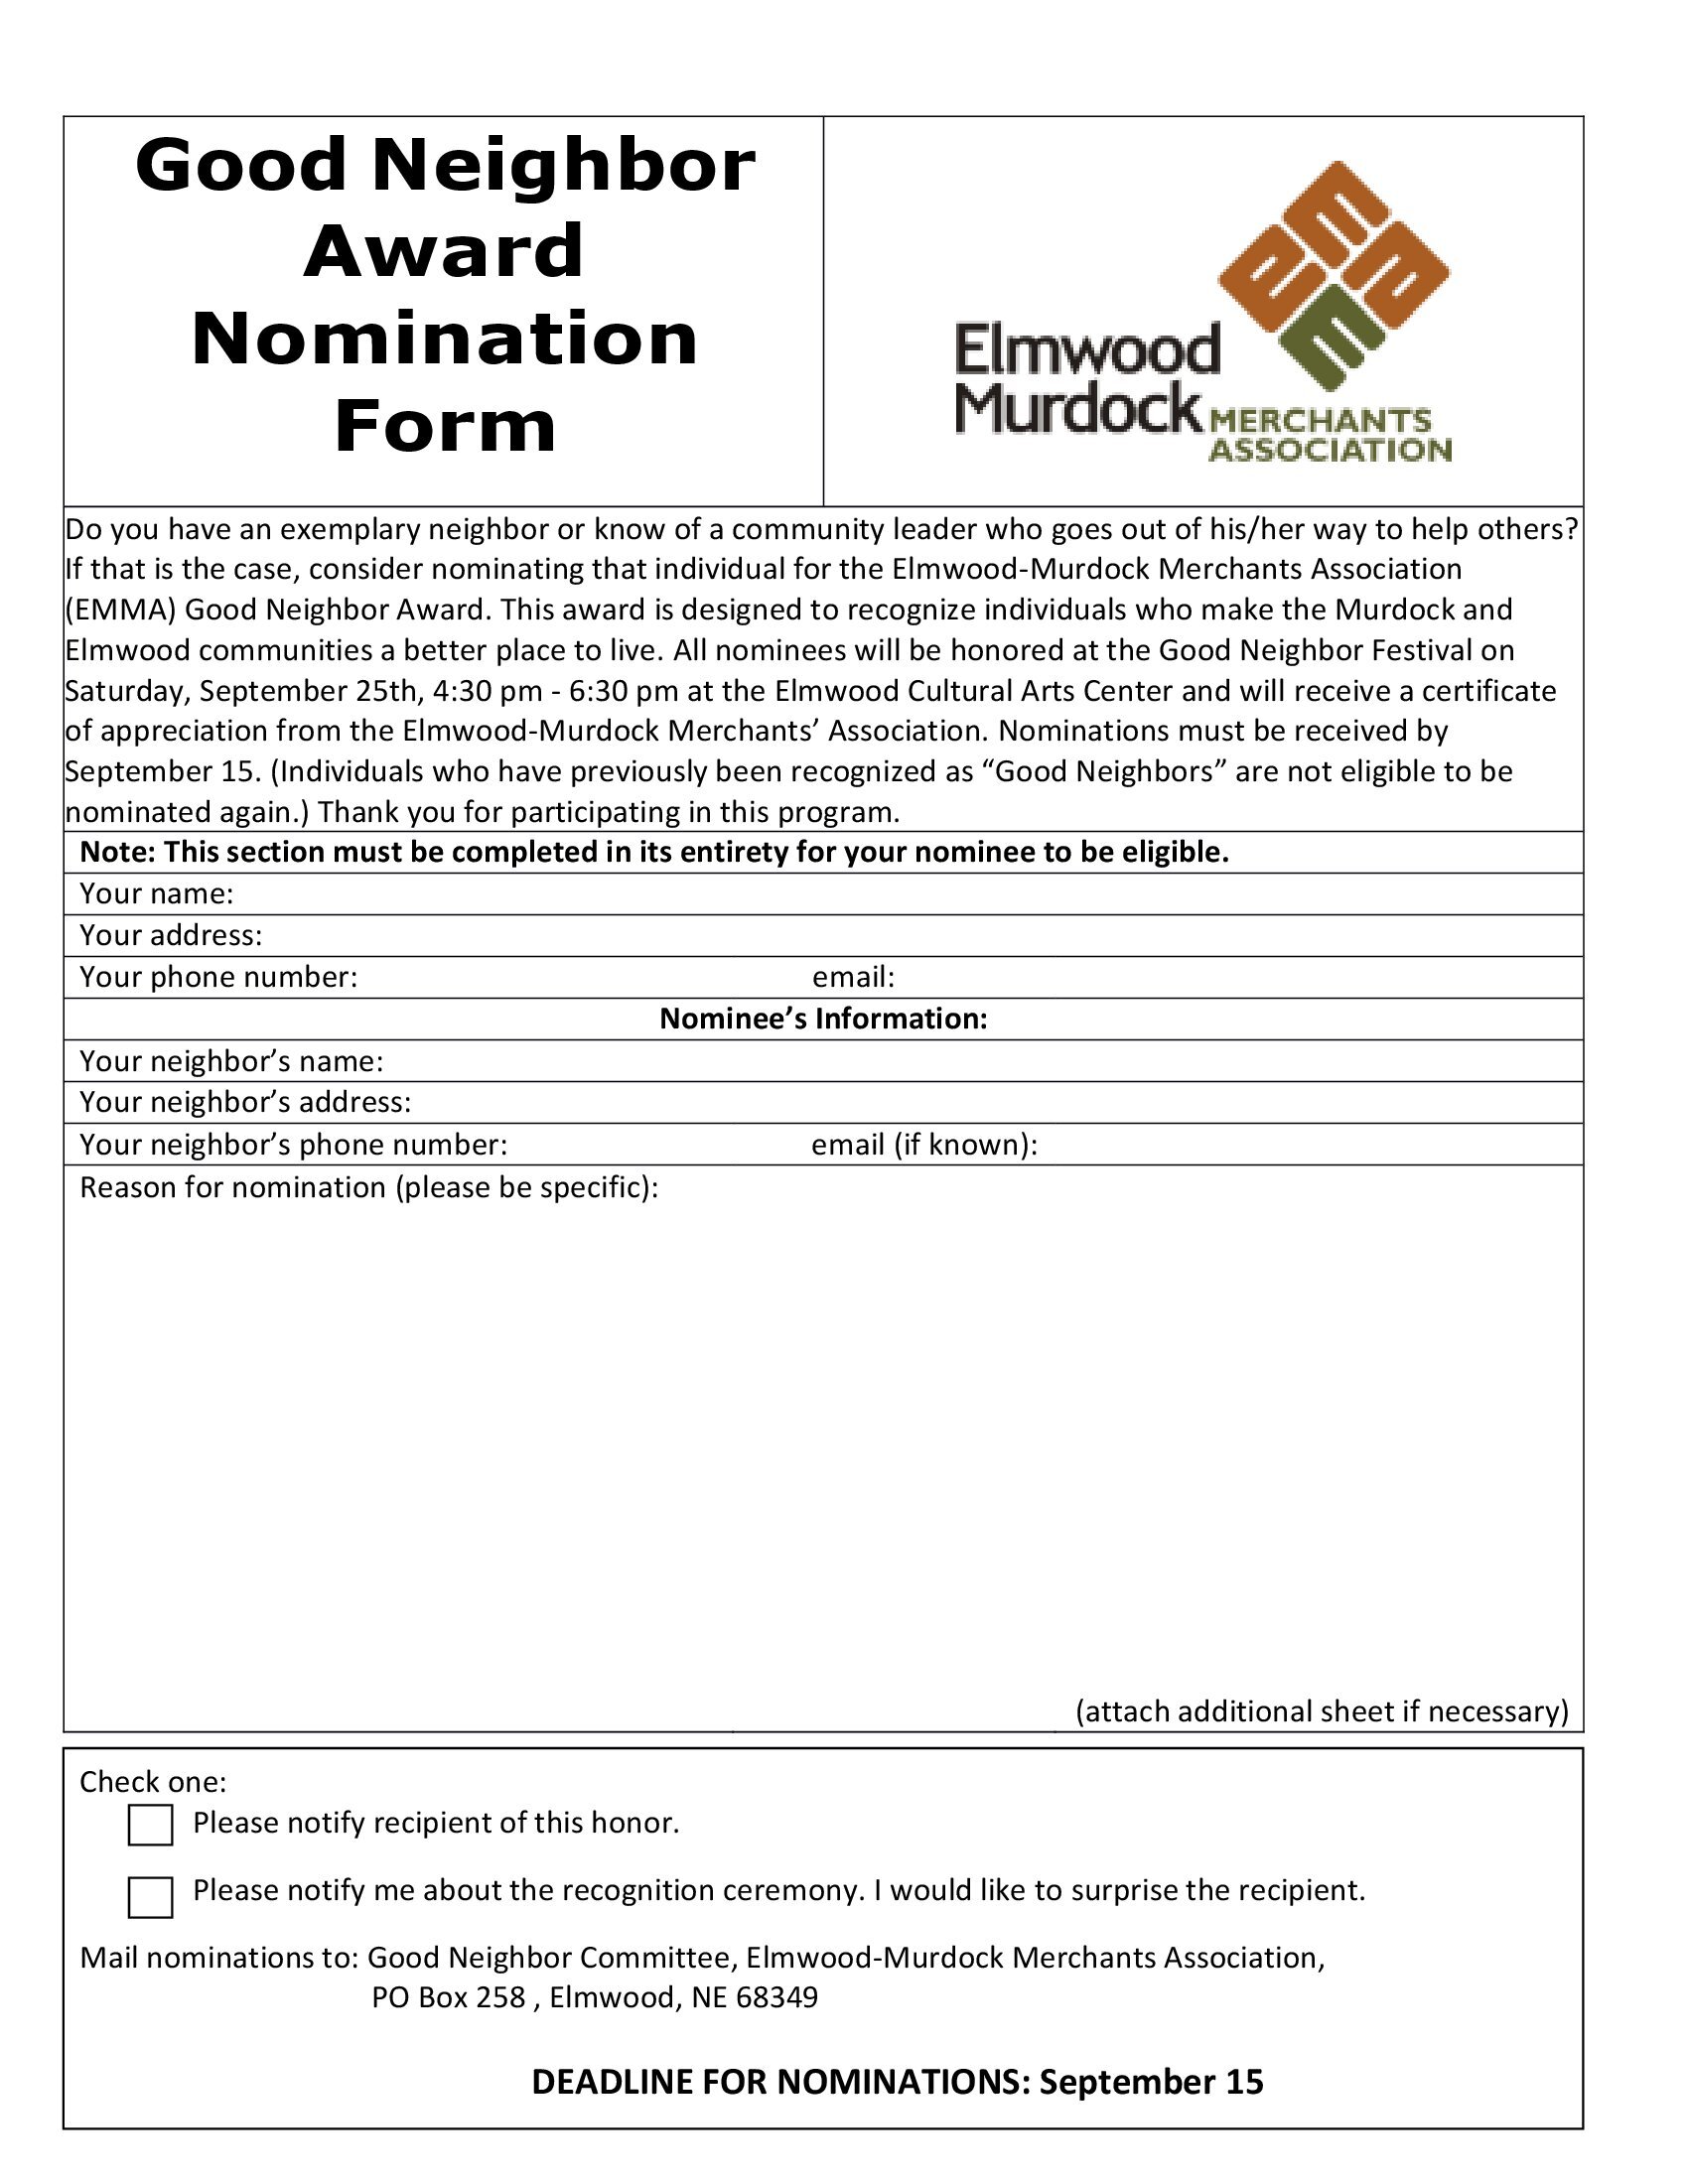 Good Neighbor Award Nomination Form 2021